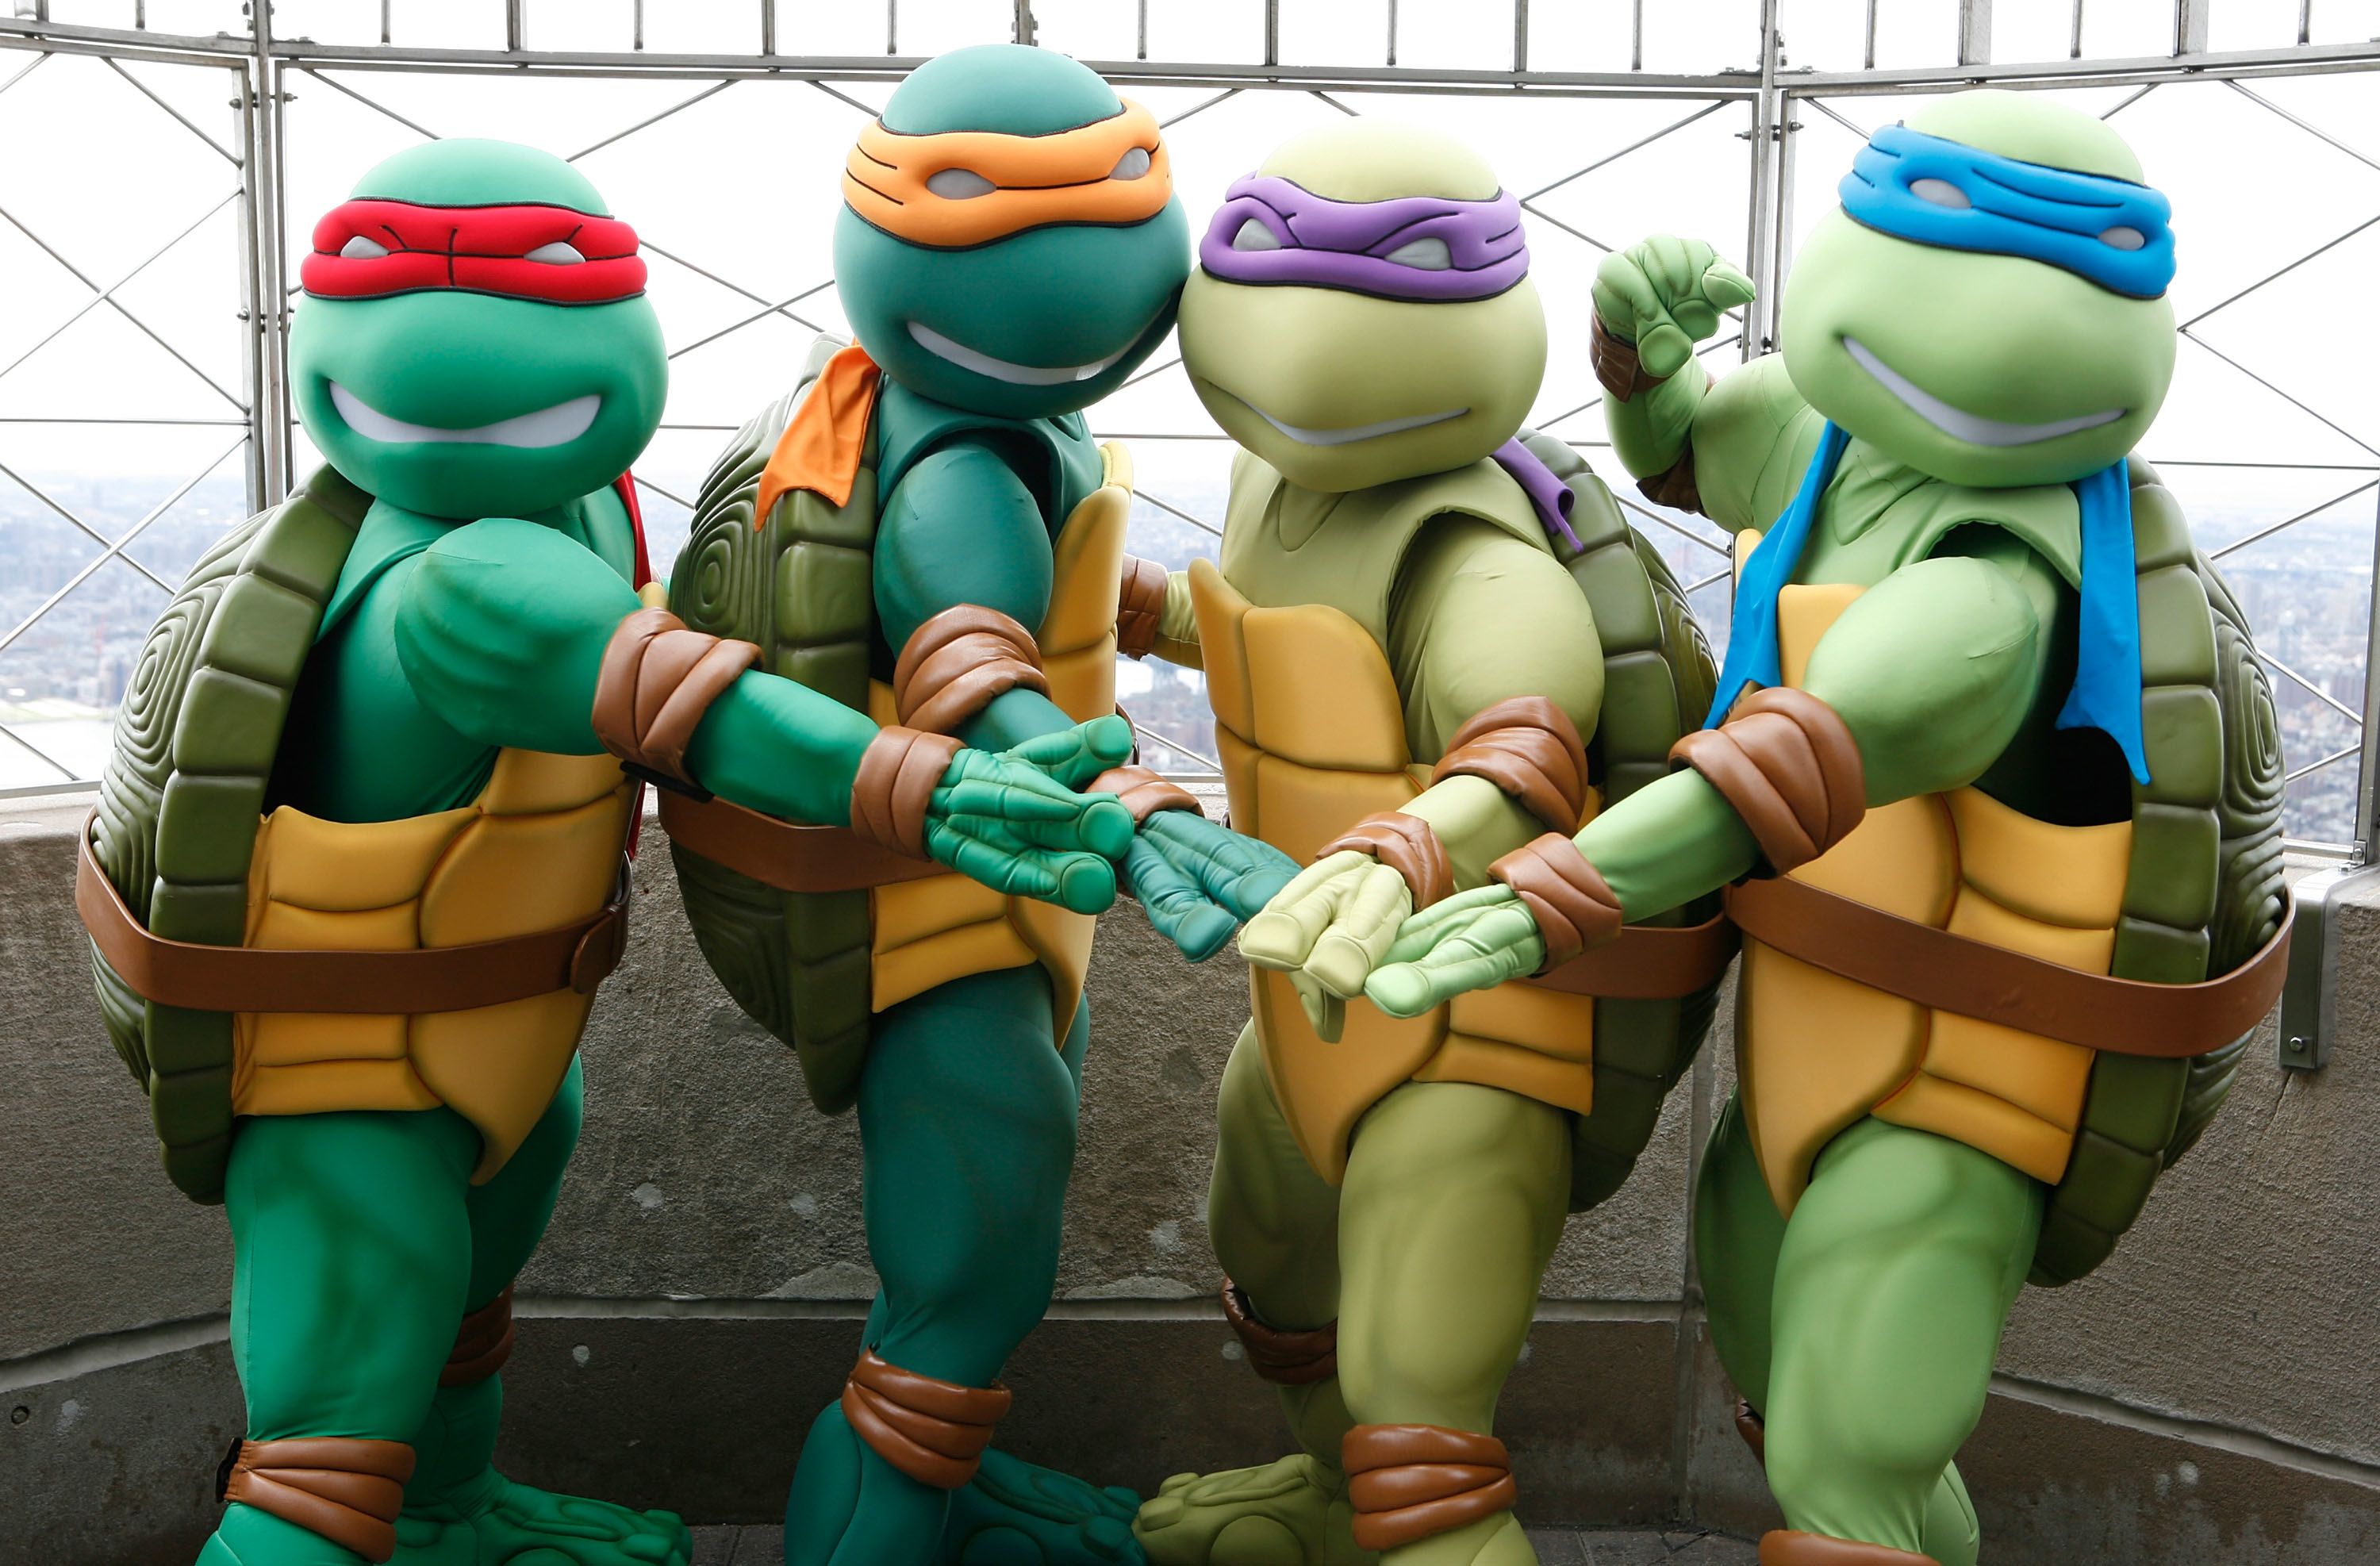 https://media.cnn.com/api/v1/images/stellar/prod/120706090406-teenage-mutant-ninja-turtles-costumes.jpg?q=w_3000,h_1974,x_0,y_0,c_fill